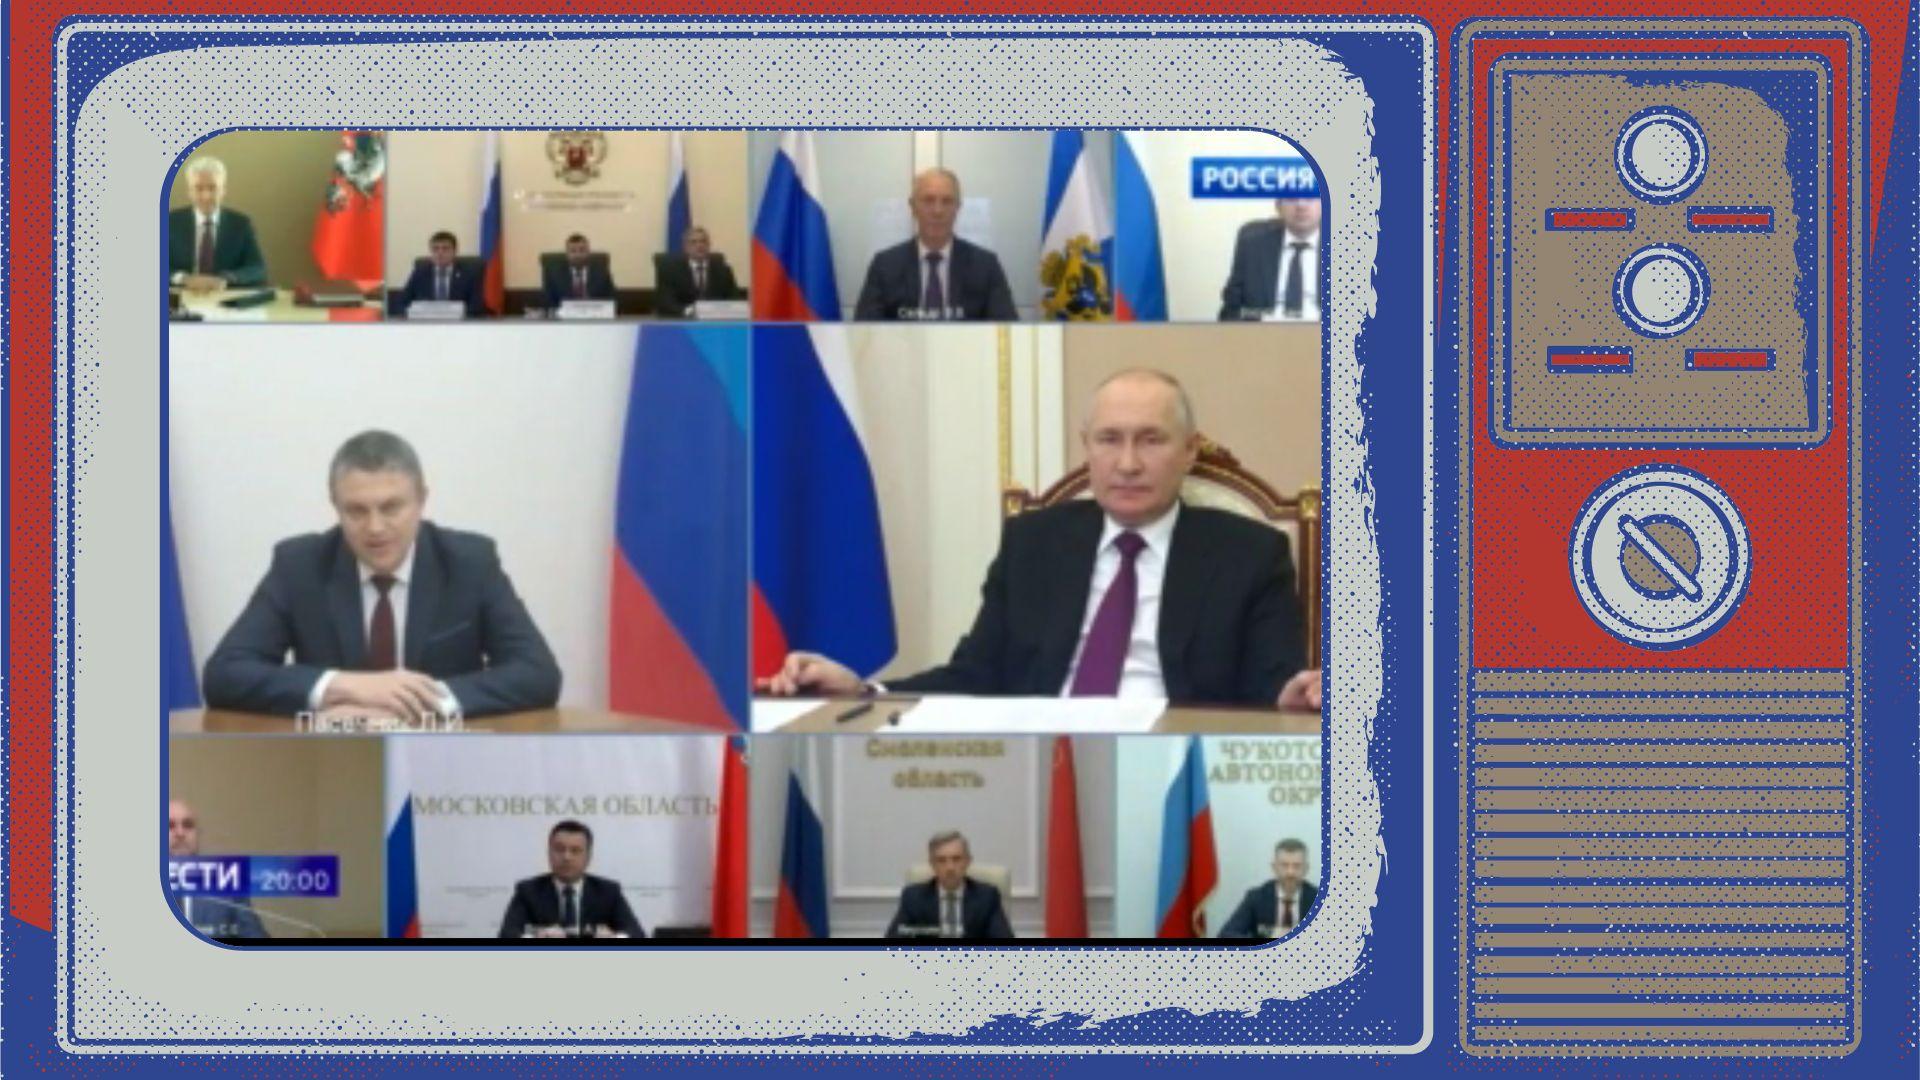 Grafika: w ramce starego telewizora - kadr z telekonferencji Putina